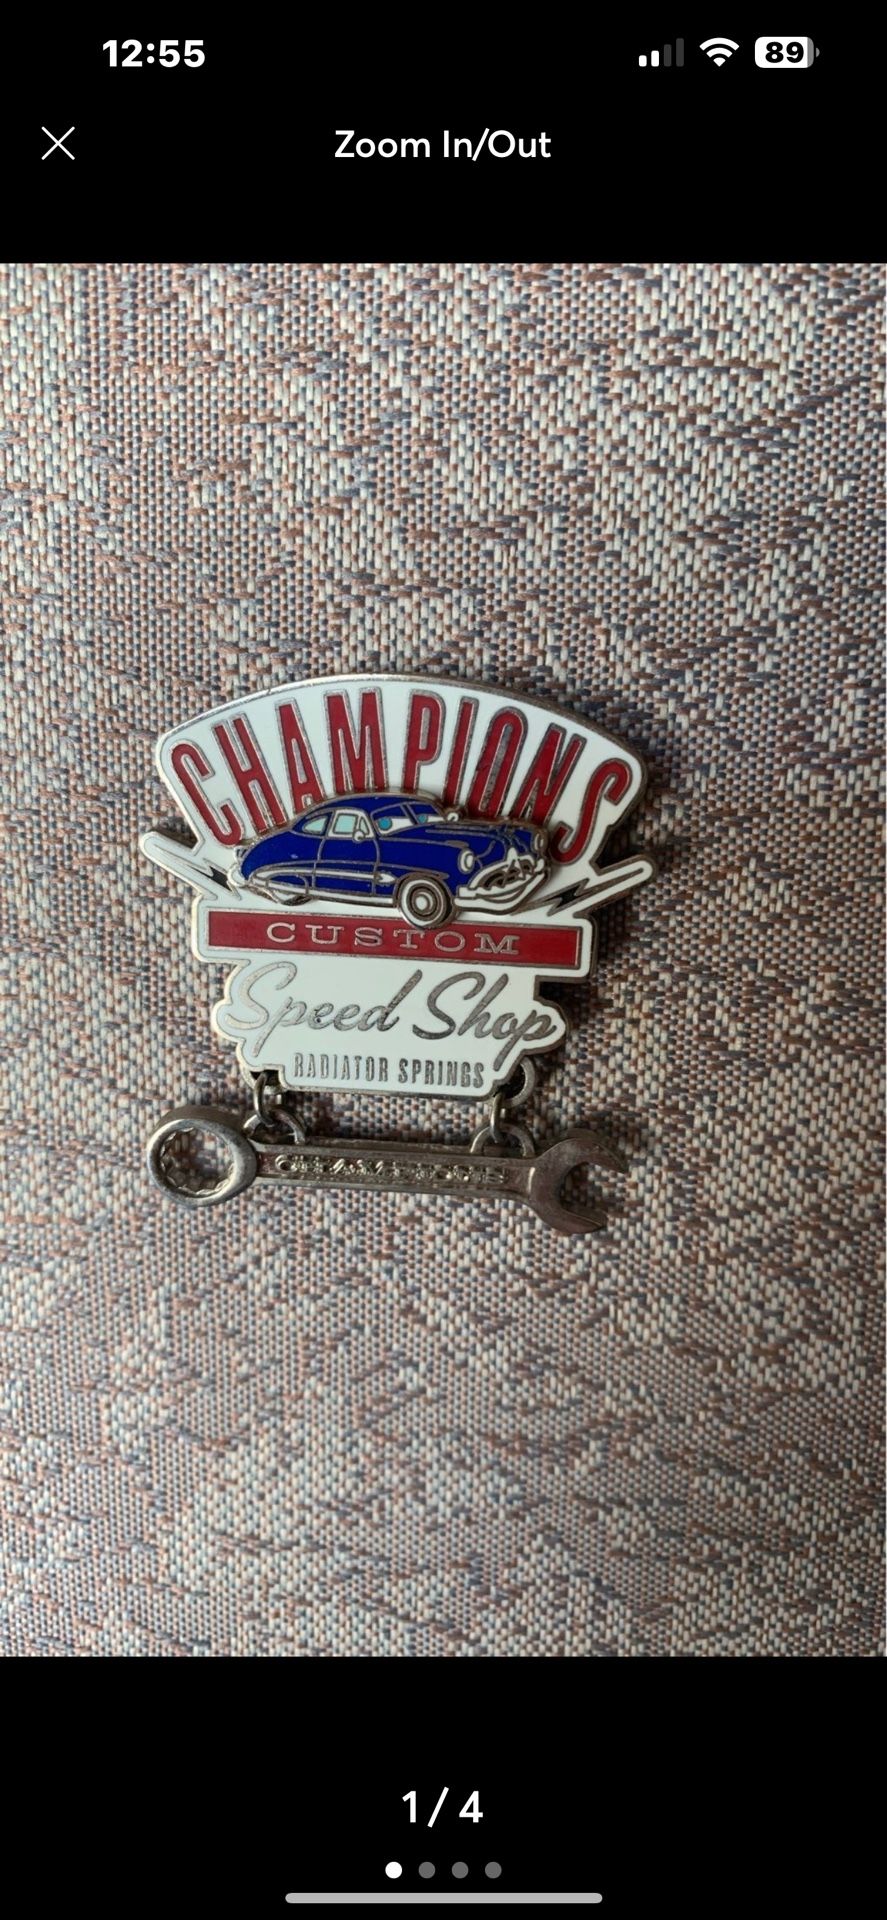 Cars Champion Custom Speed Shop Radiator Springs Disney Pin